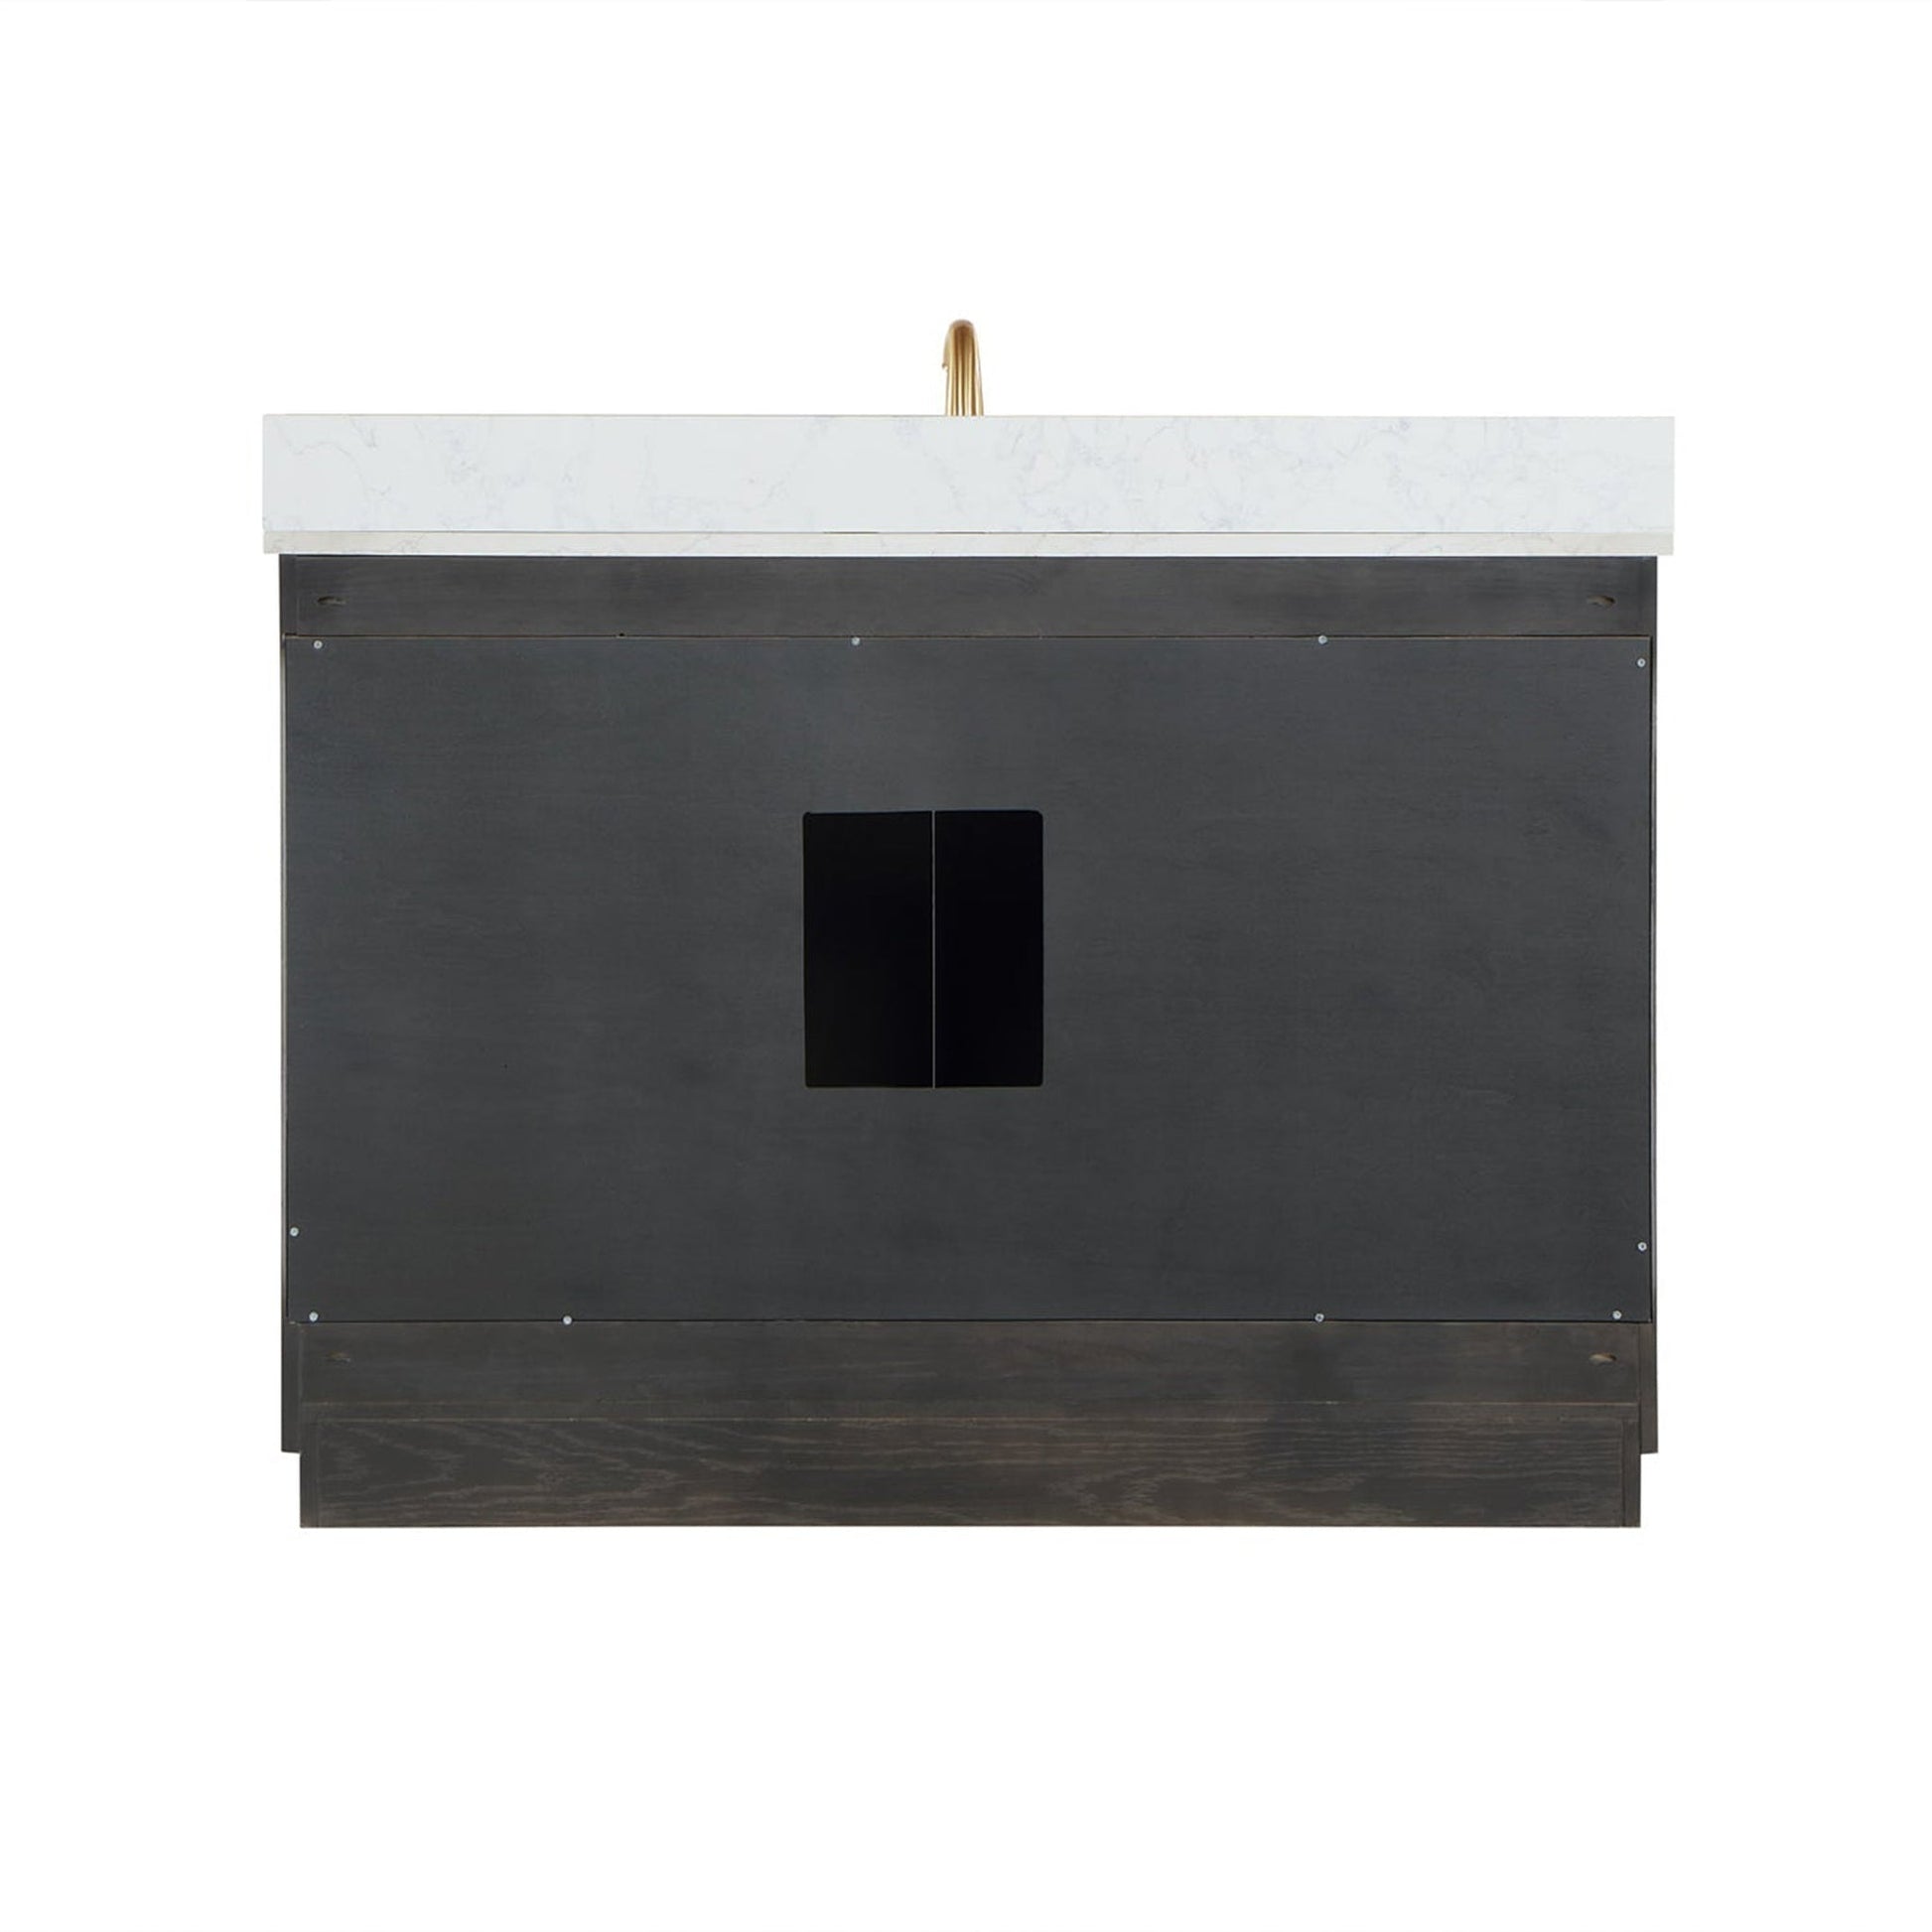 Altair Gazsi 48" Brown Oak Freestanding Single Bathroom Vanity Set With Elegant Composite Grain White Stone Top, Rectangular Undermount Ceramic Sink, Overflow, and Backsplash